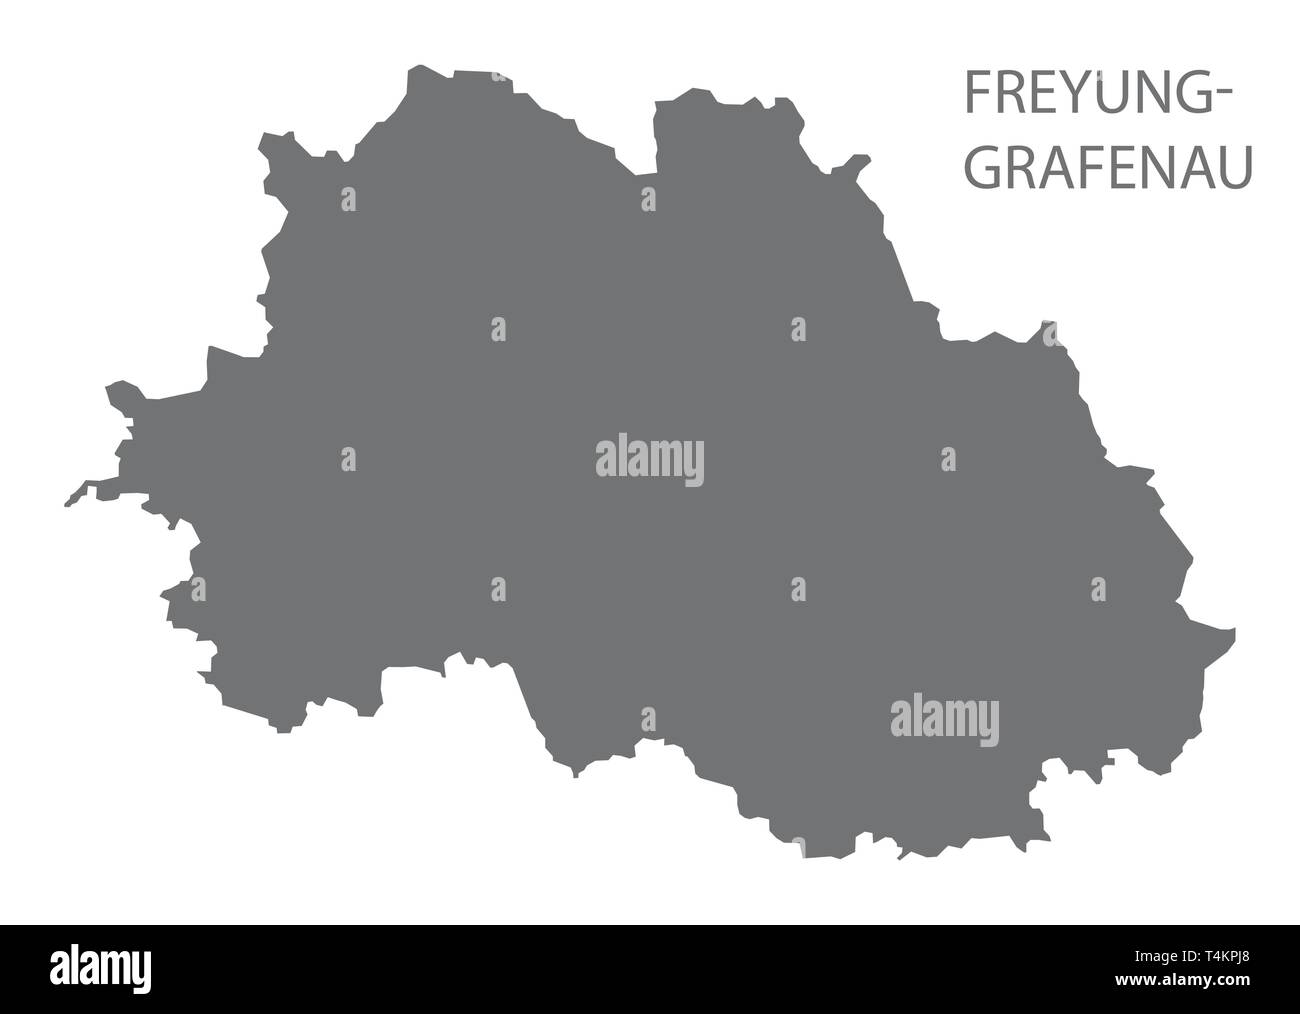 Freyung-Grafenau grey county map of Bavaria Germany Stock Vector